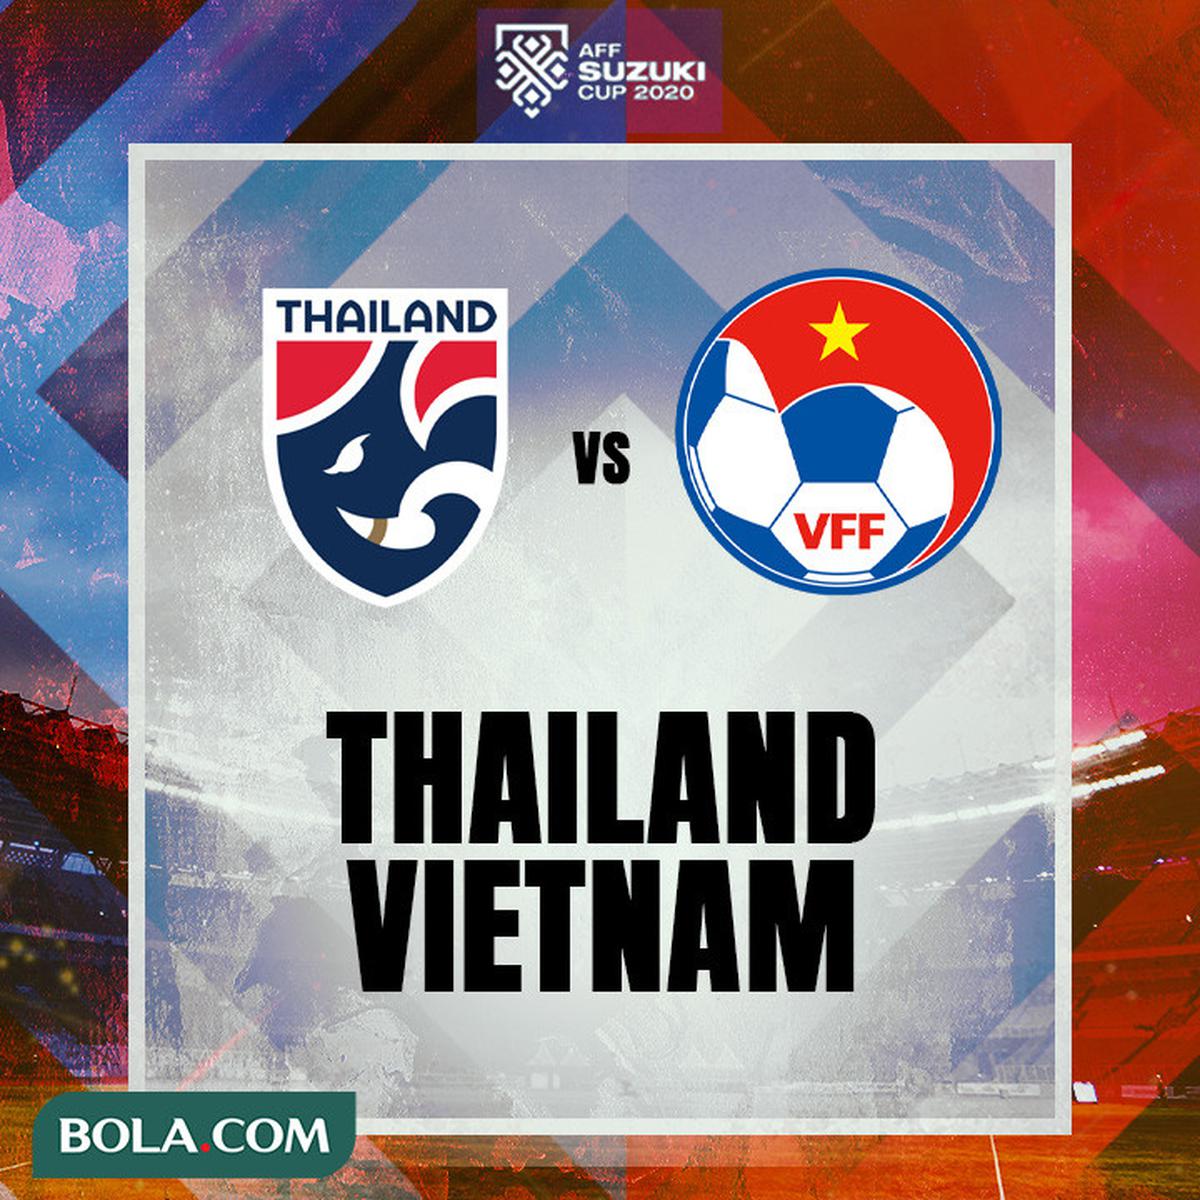 Vietnam vs thailand